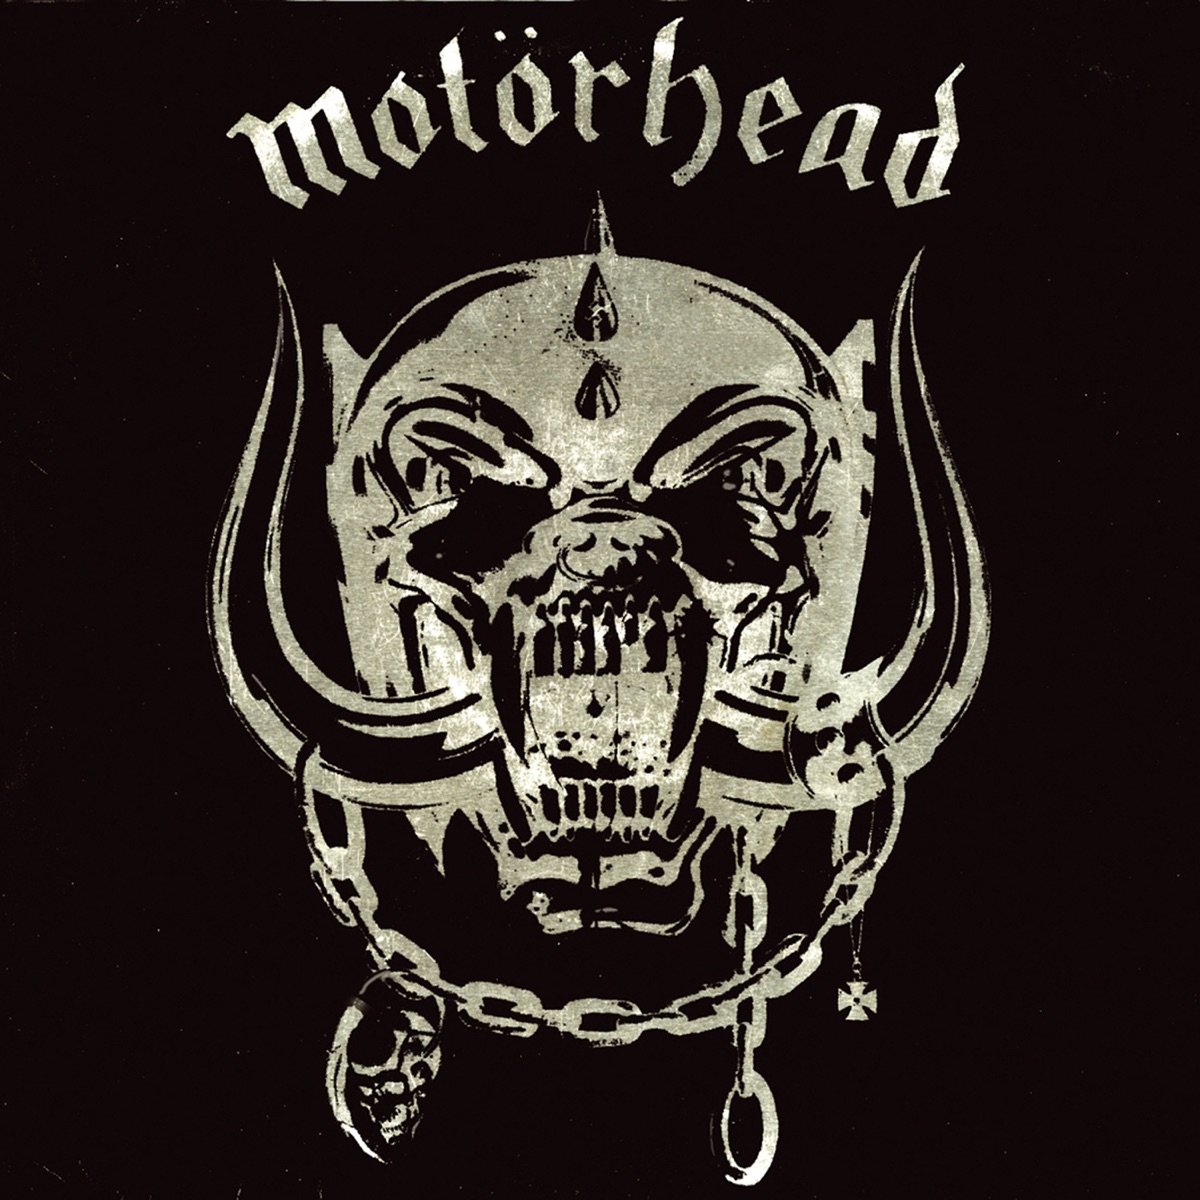 No Remorse - Album by Motörhead - Apple Music